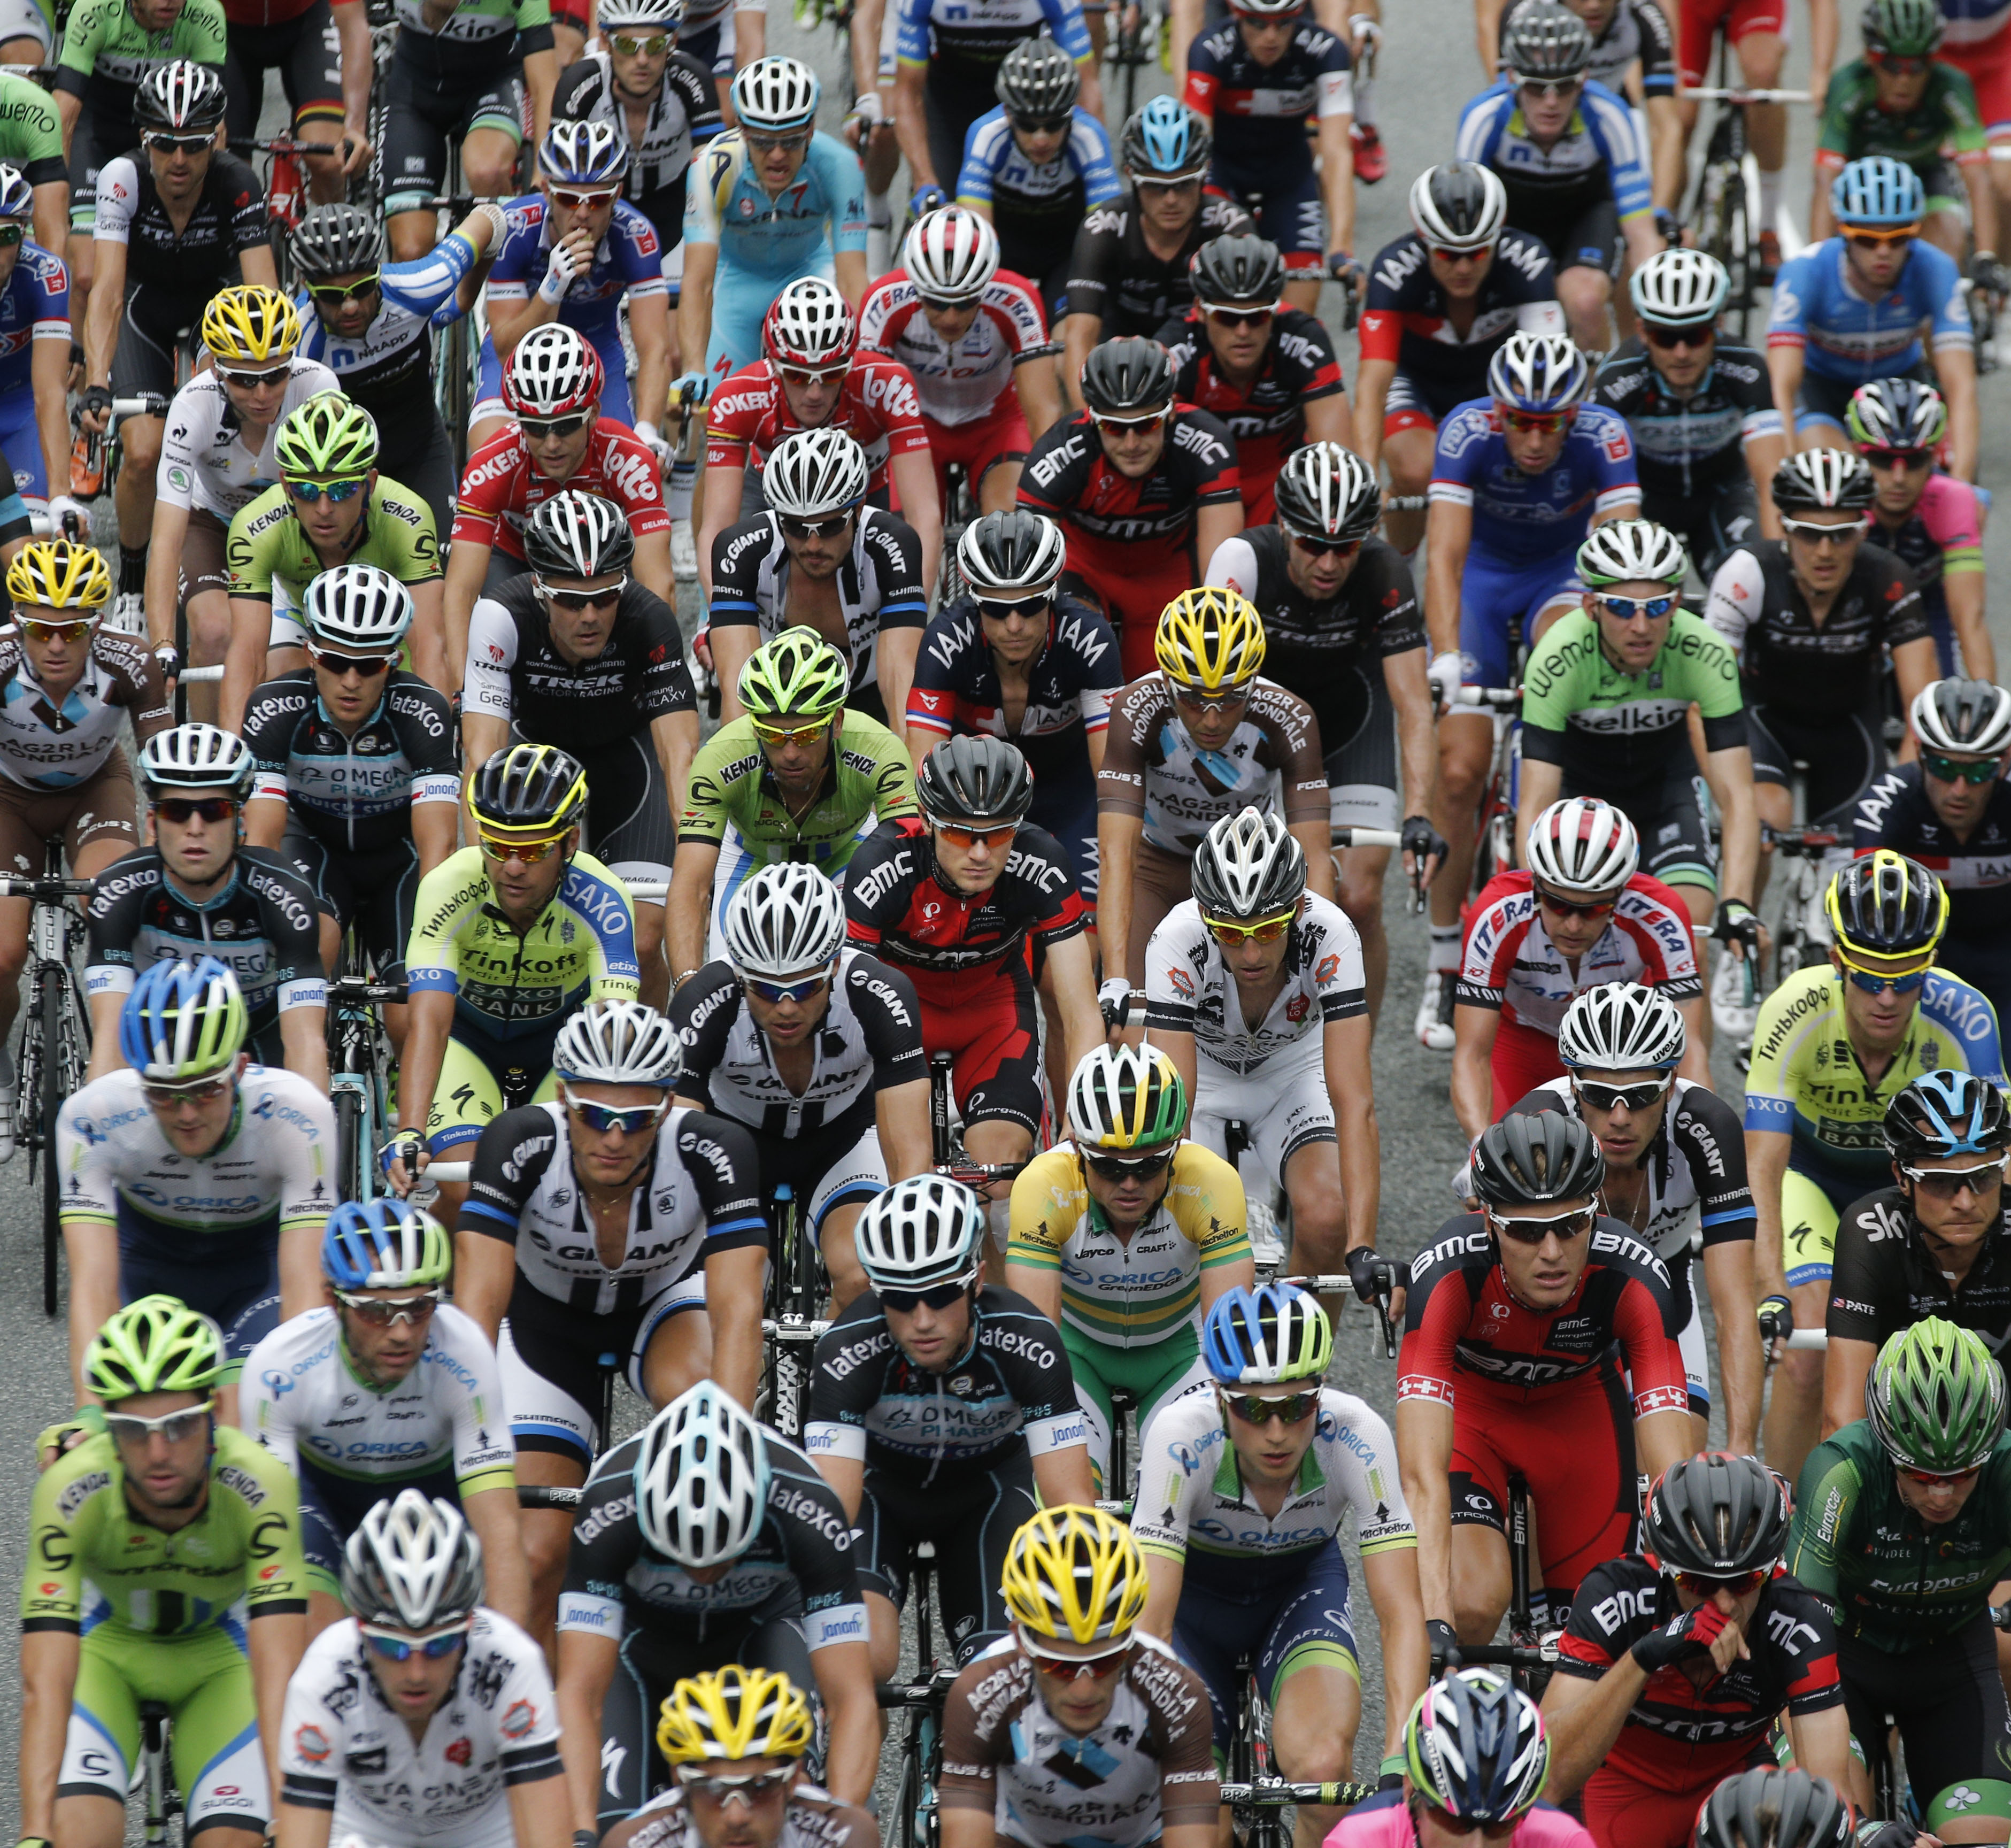 Cierran diversas vialidades por etapa de Tour de France en CDMX